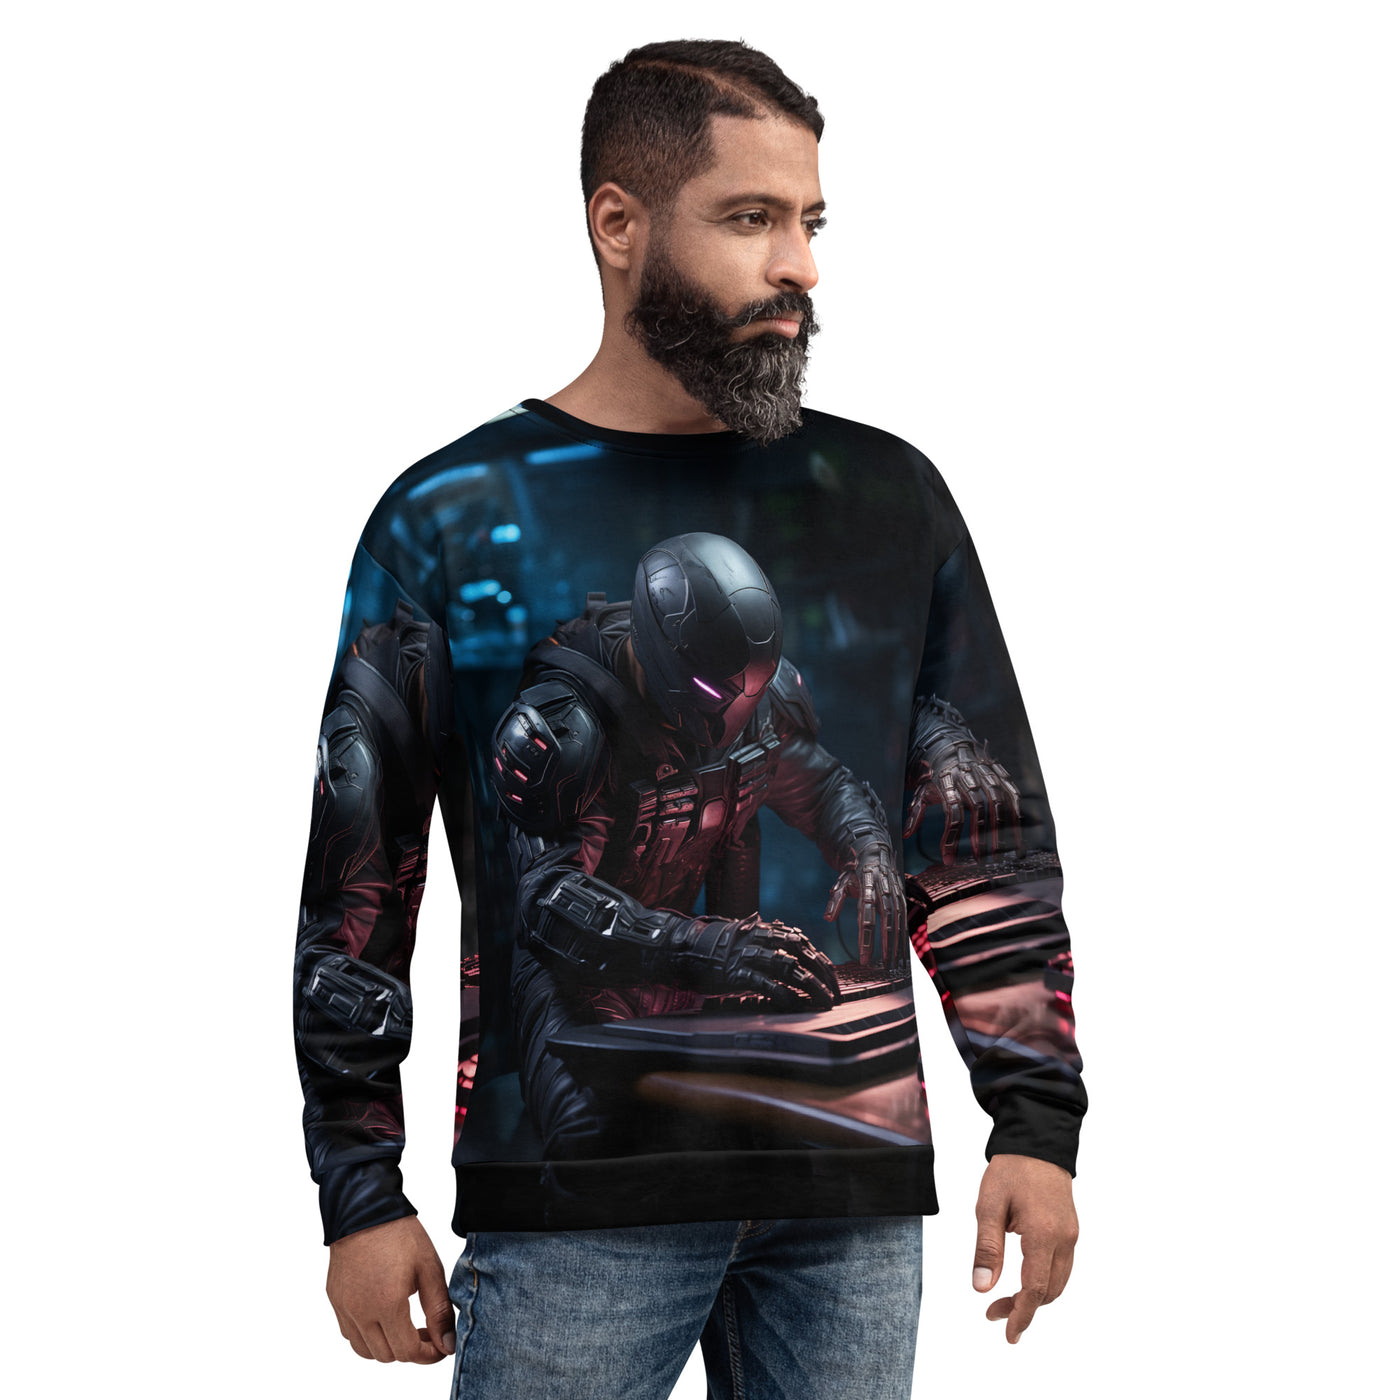 CyberArms Warrior v6 - Unisex Sweatshirt